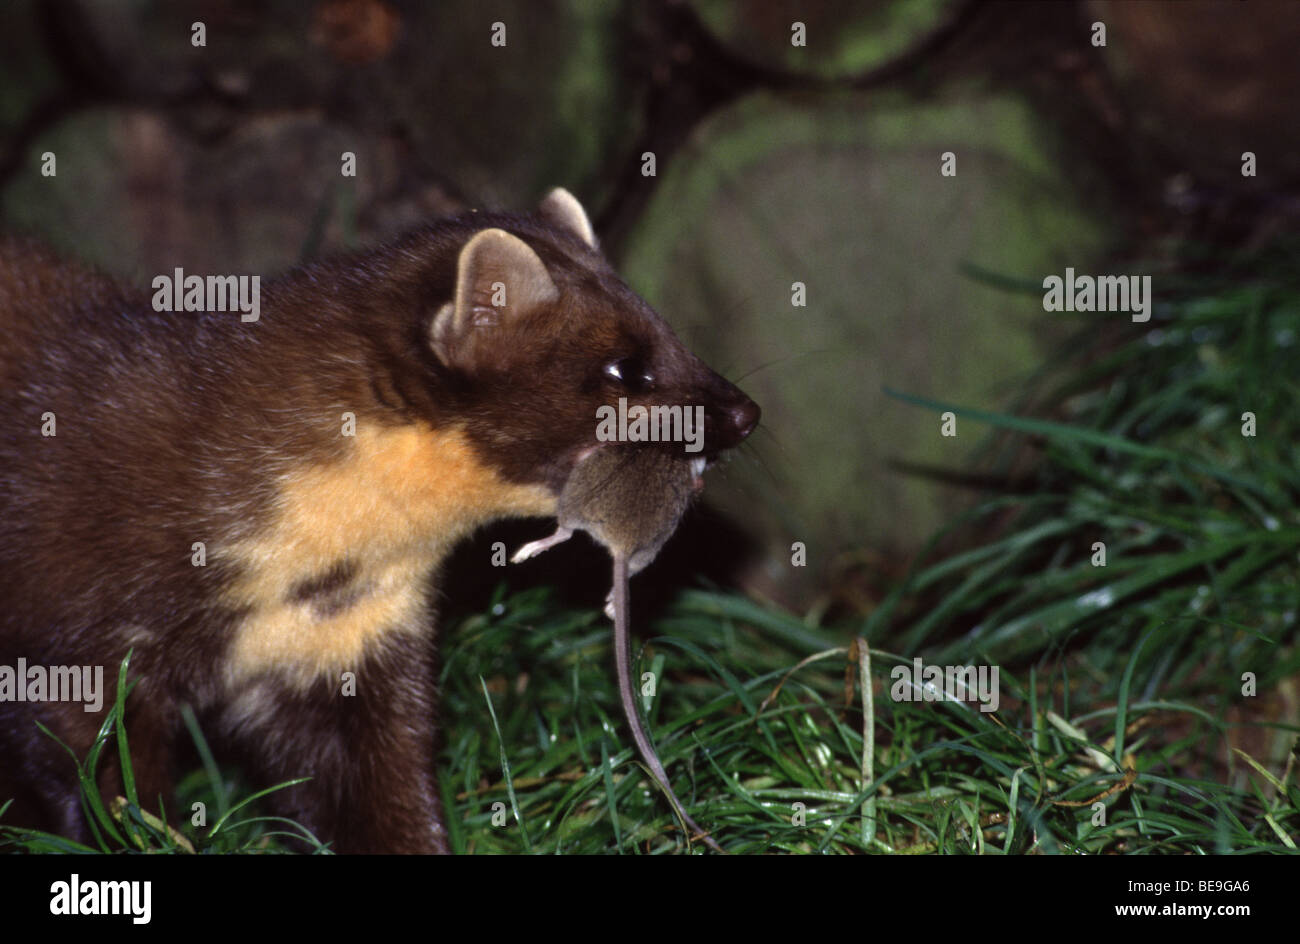 Boommarter met prooi, muis . Pine Marten with prey, mouse. Baummarter mit Nahrung, Maus. Stock Photo